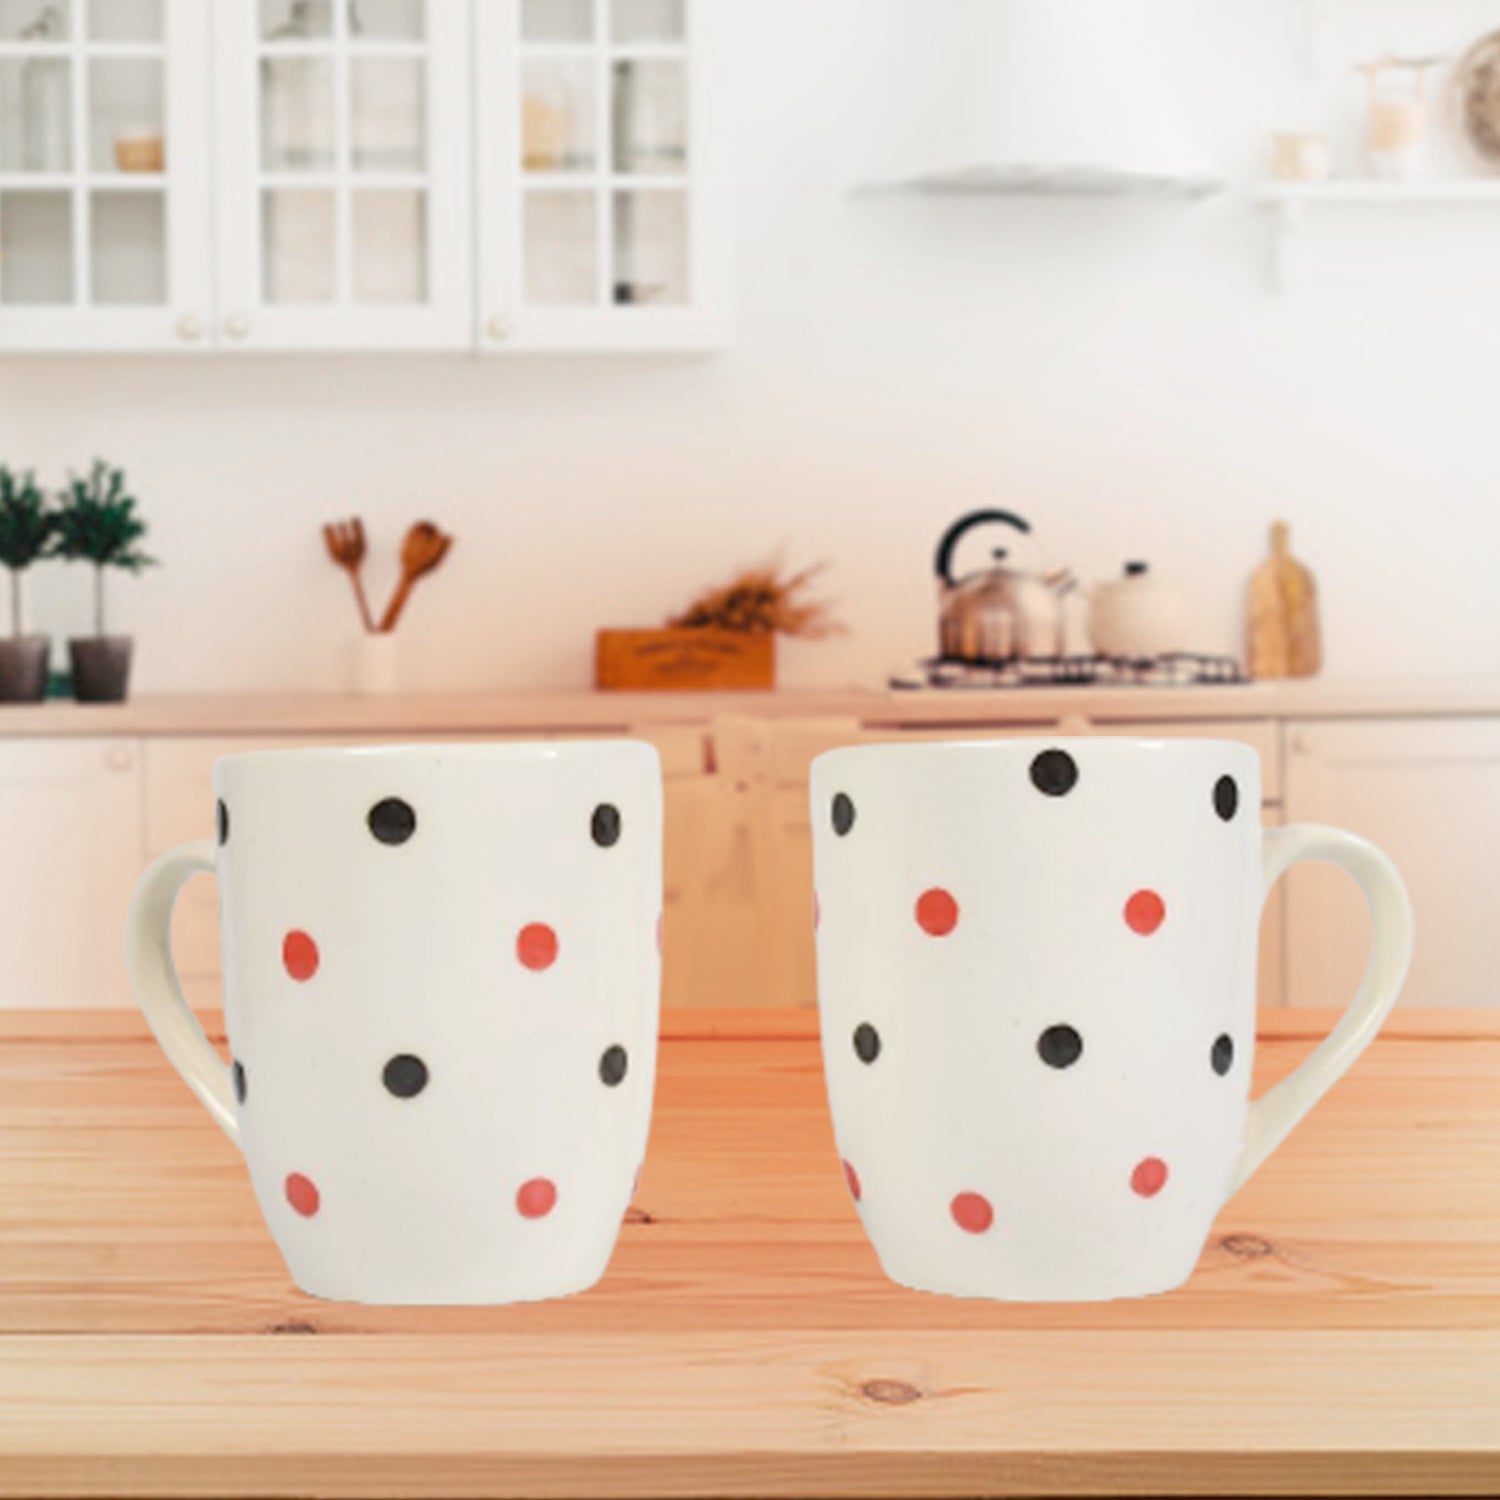 7140 Cup & Plate Set Morning Tea Serving Use Ceramic Mug Set For Home & Kitchen Use DeoDap